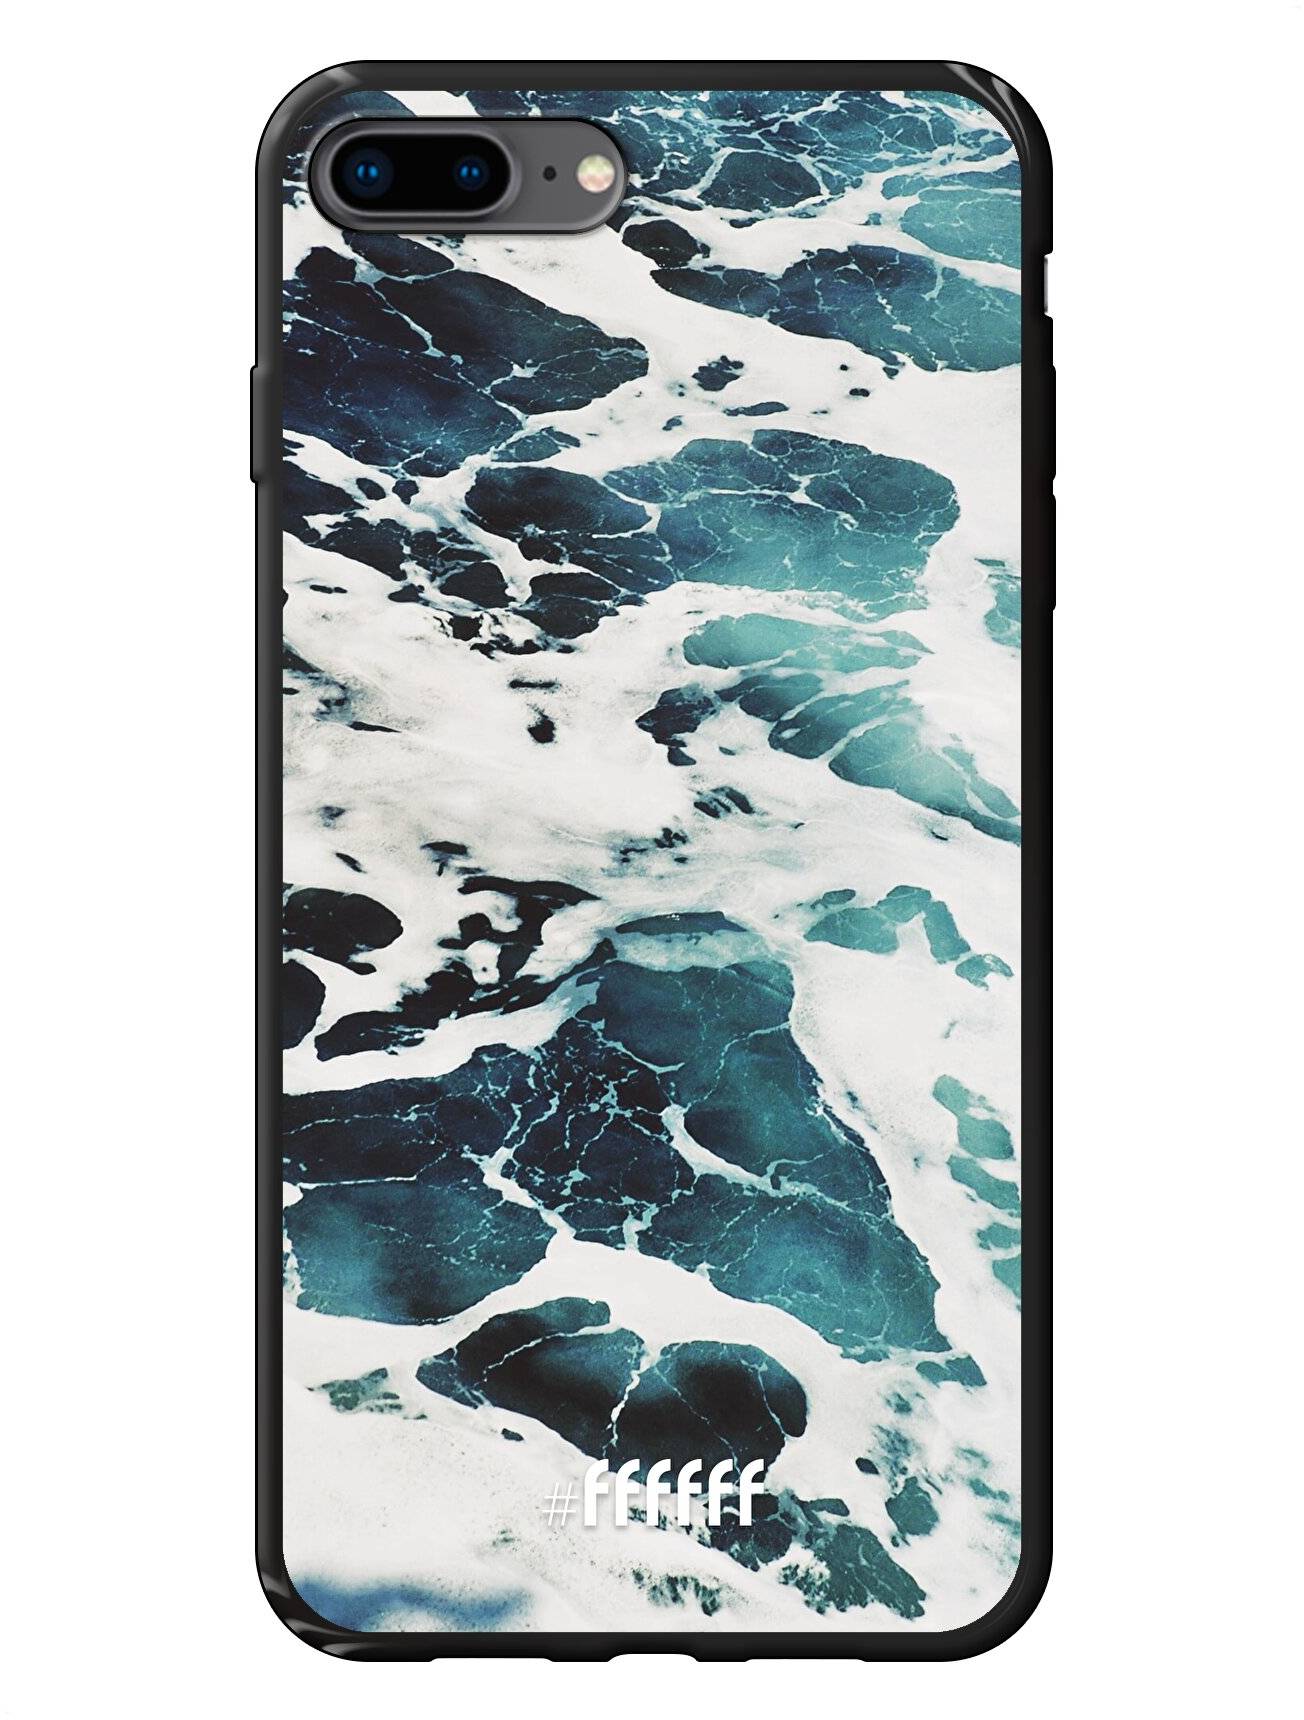 Waves iPhone 8 Plus